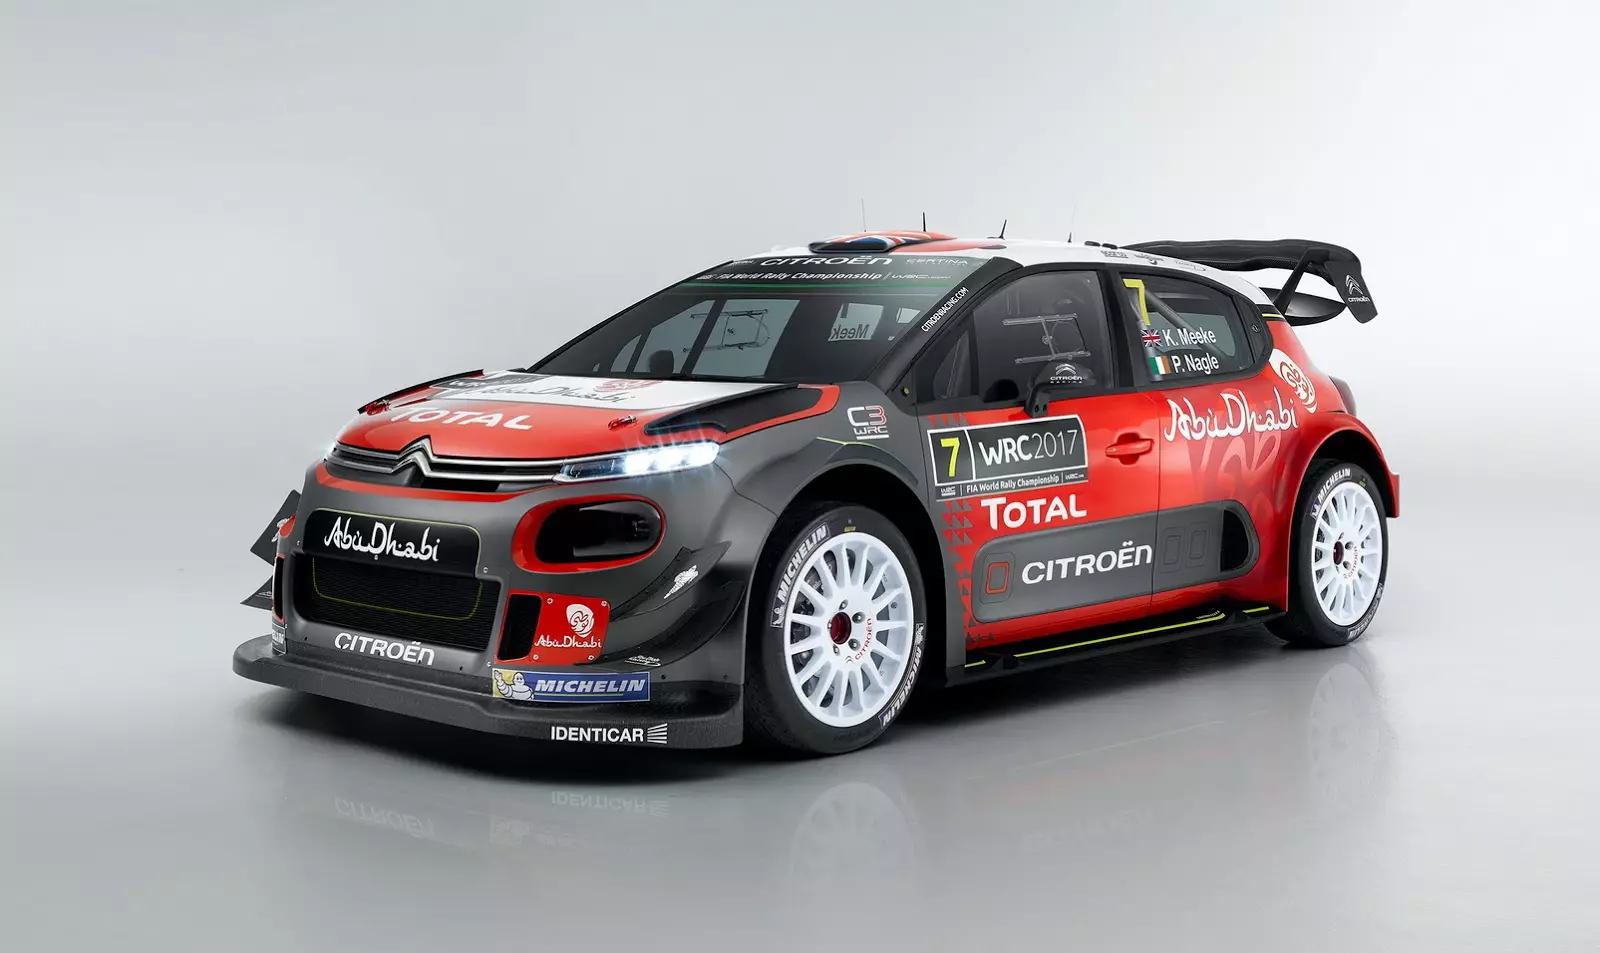 Citroën C3 WRC: বিশ্ব র্যালি চ্যাম্পিয়নশিপে ফরাসি আক্রমণ